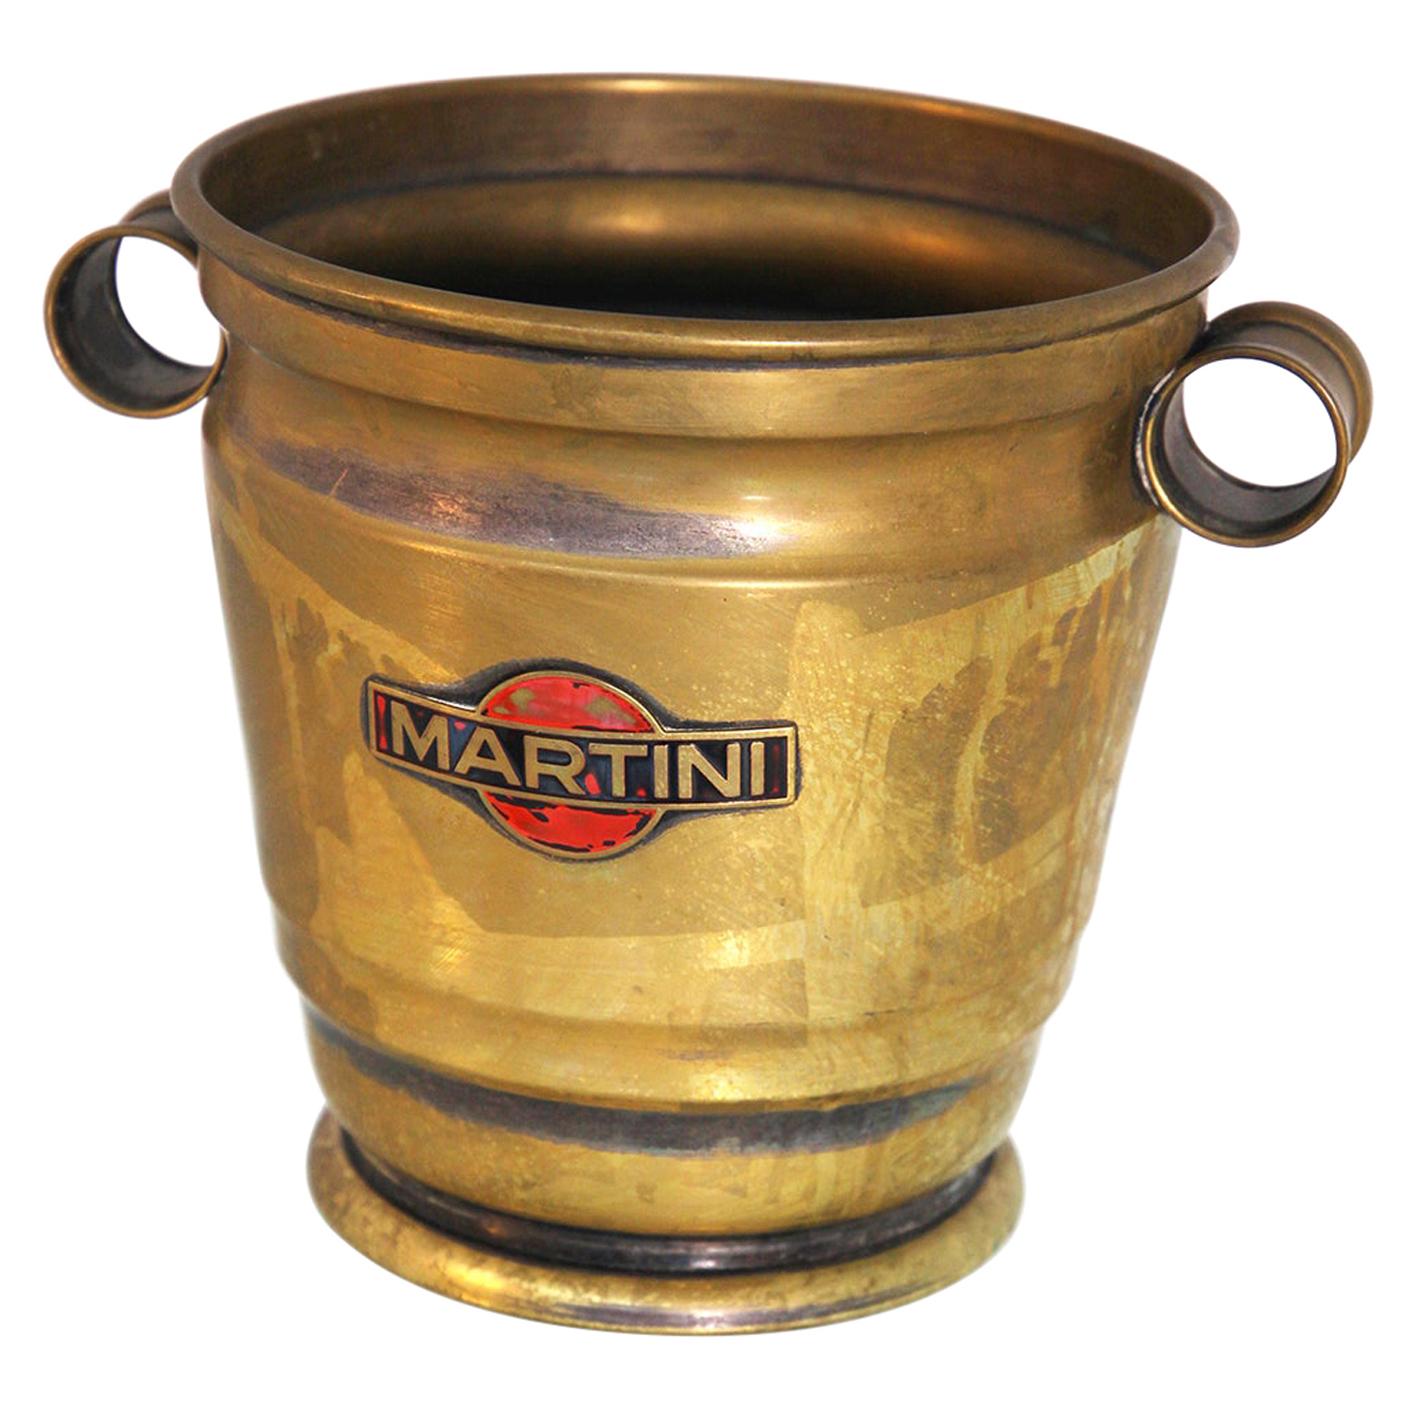 Martini Ice Bucket with Original Logo in Nickel-Plated Brass